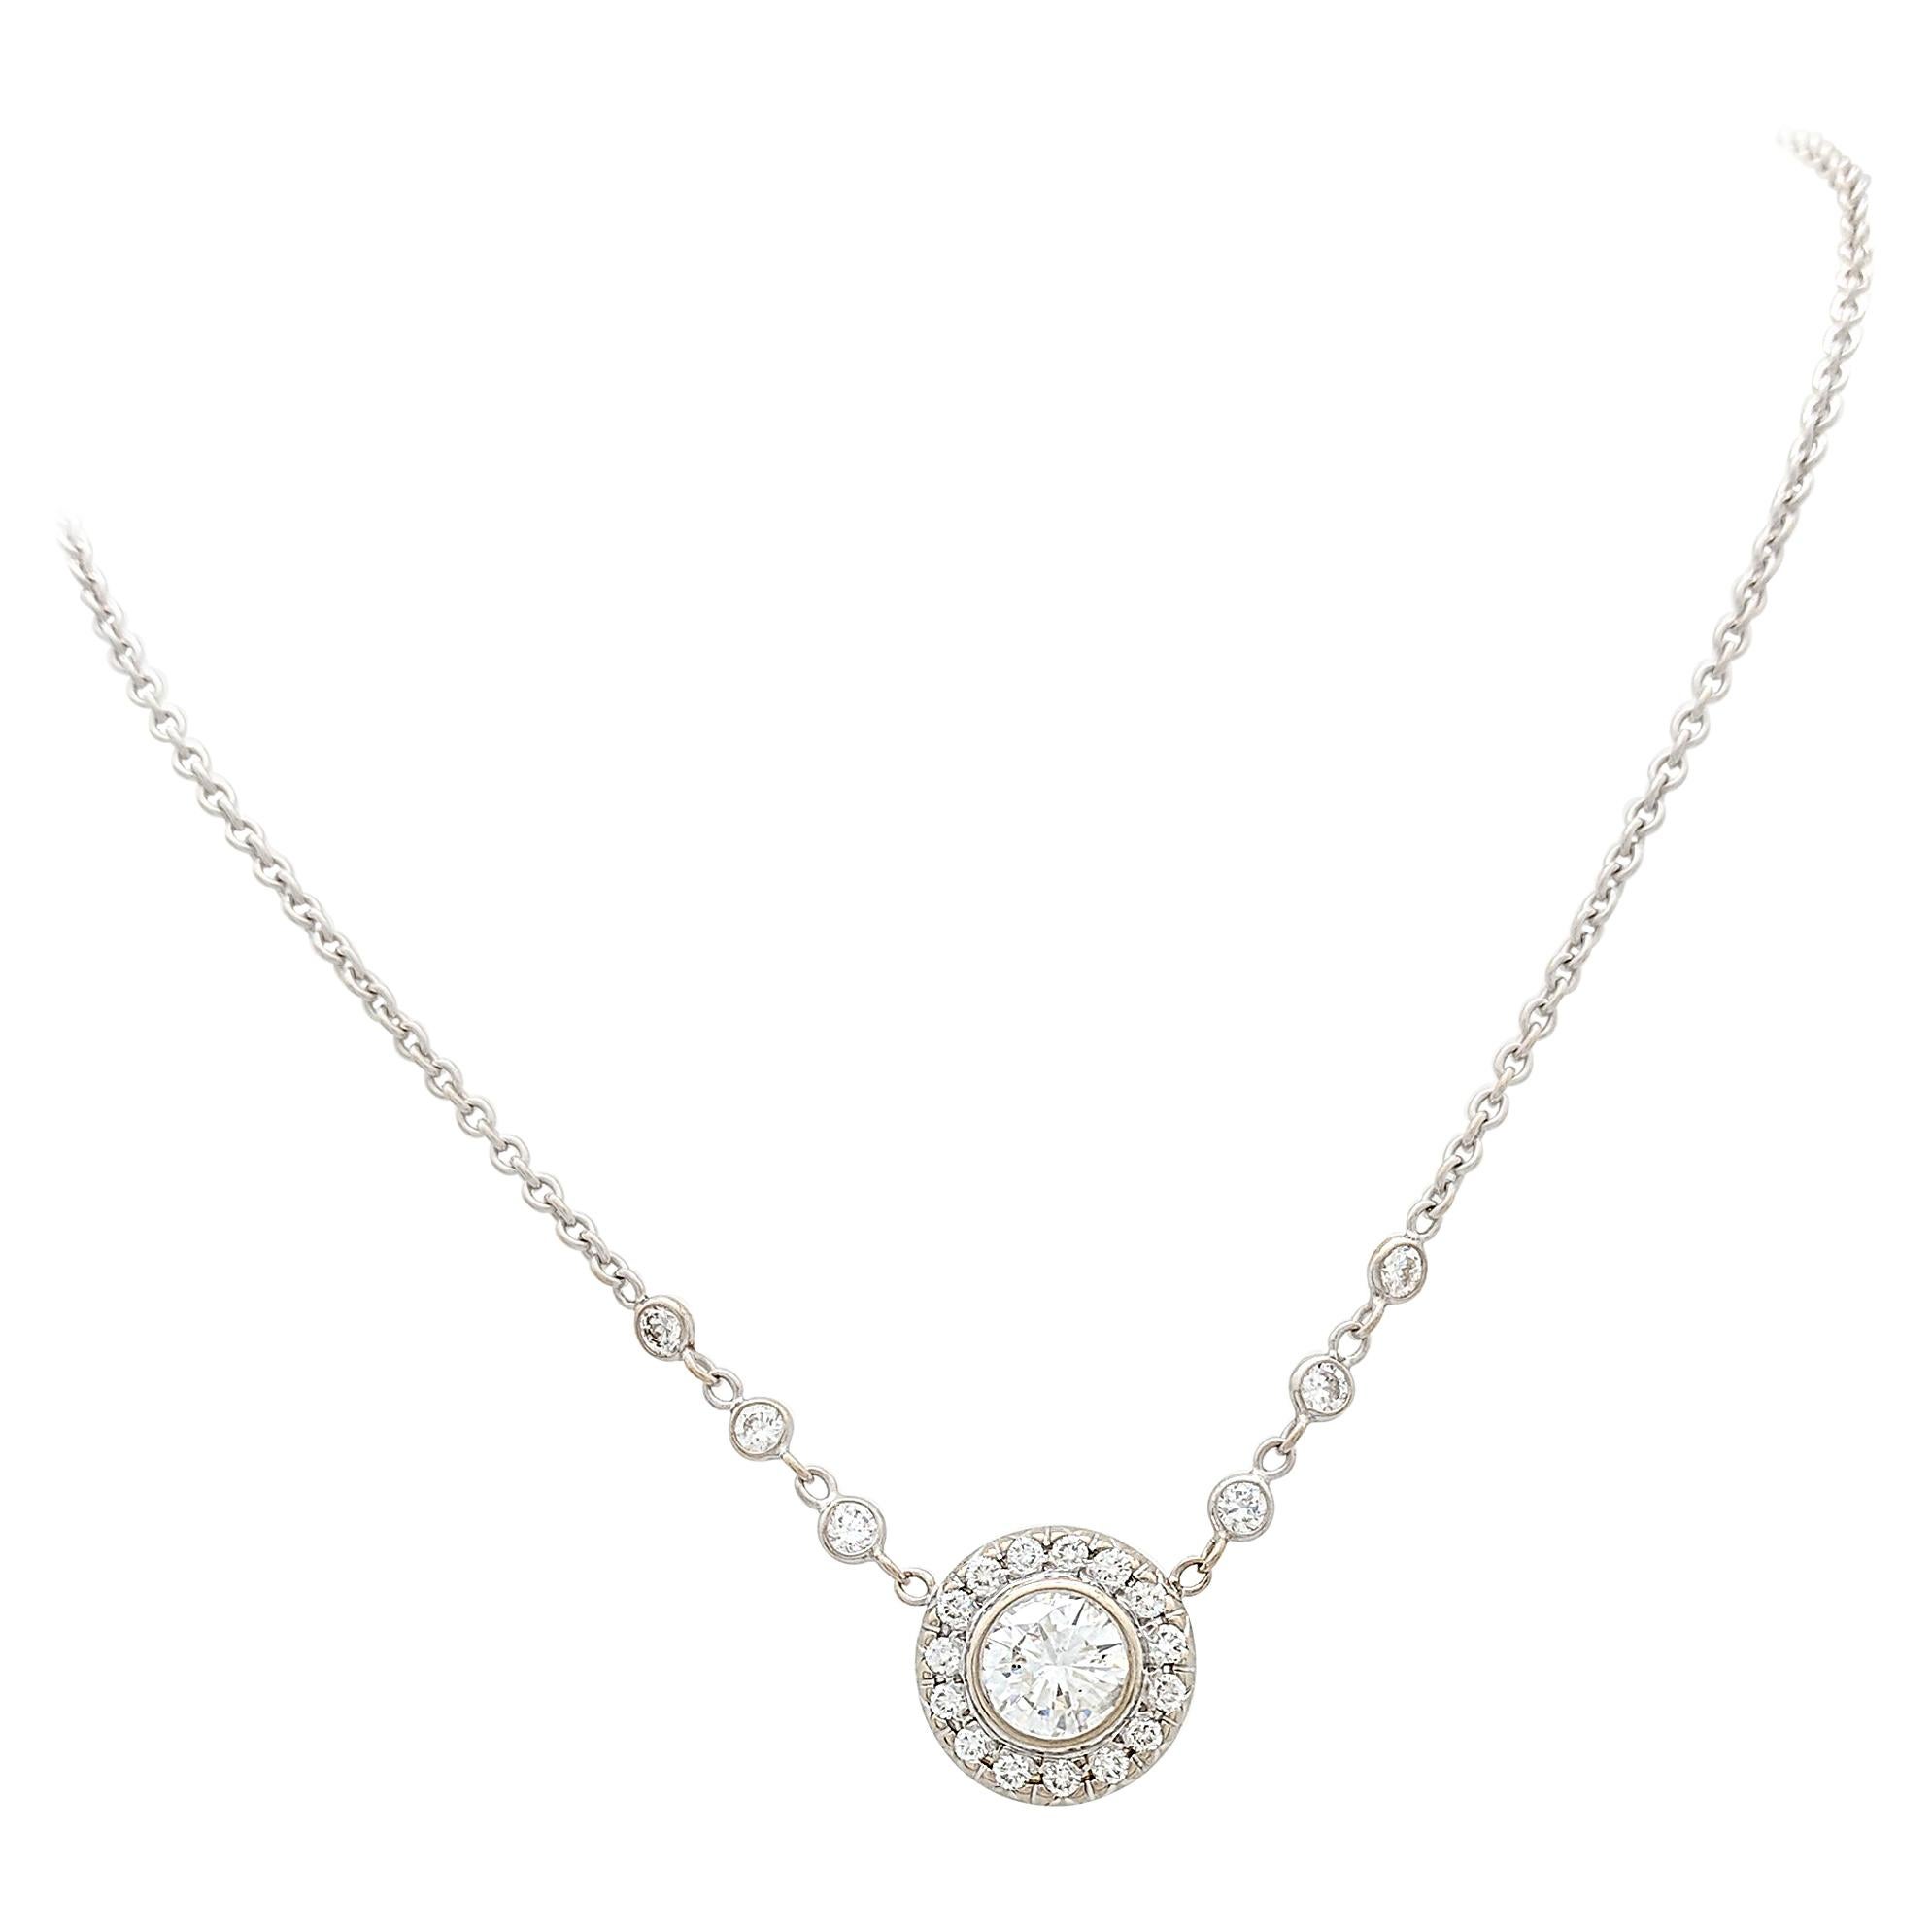 1.10 Carat Round Diamond Bezel Set in 18 Karat White Gold Halo Pendant Necklace